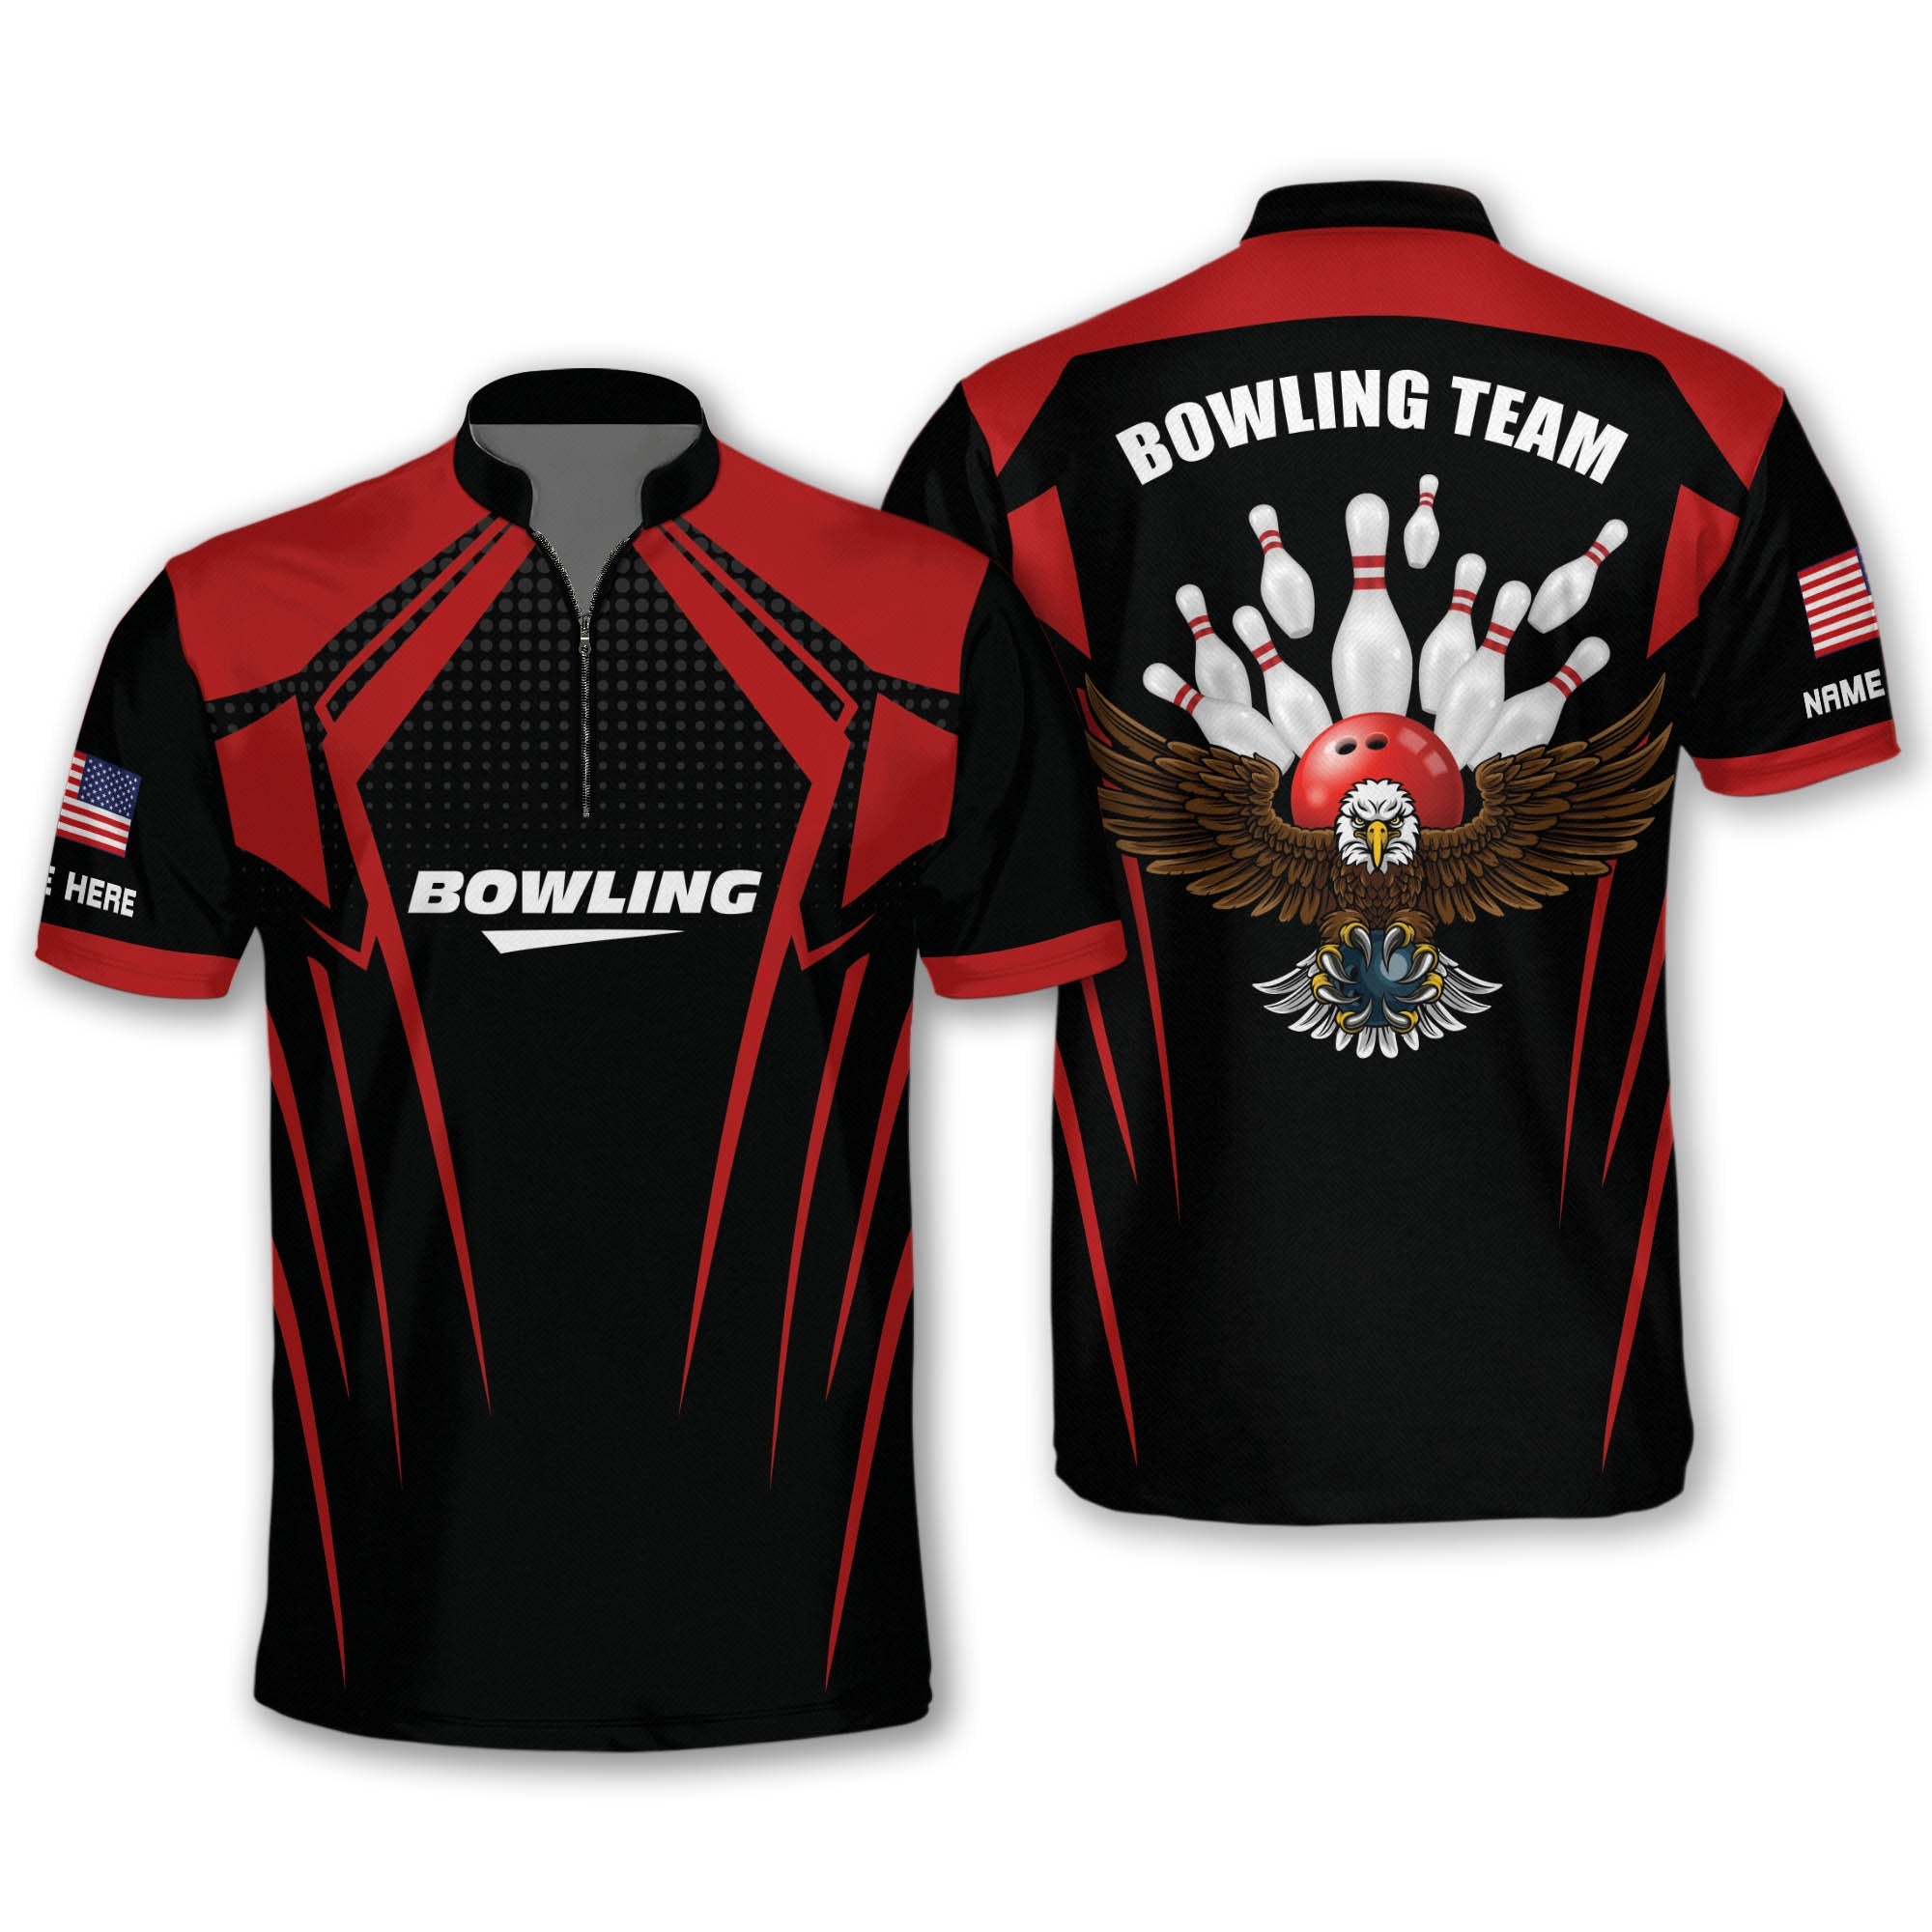 USA Bowling League Jersey Shirts For Men/ Personalized Bowling Jersey Shirt Flag